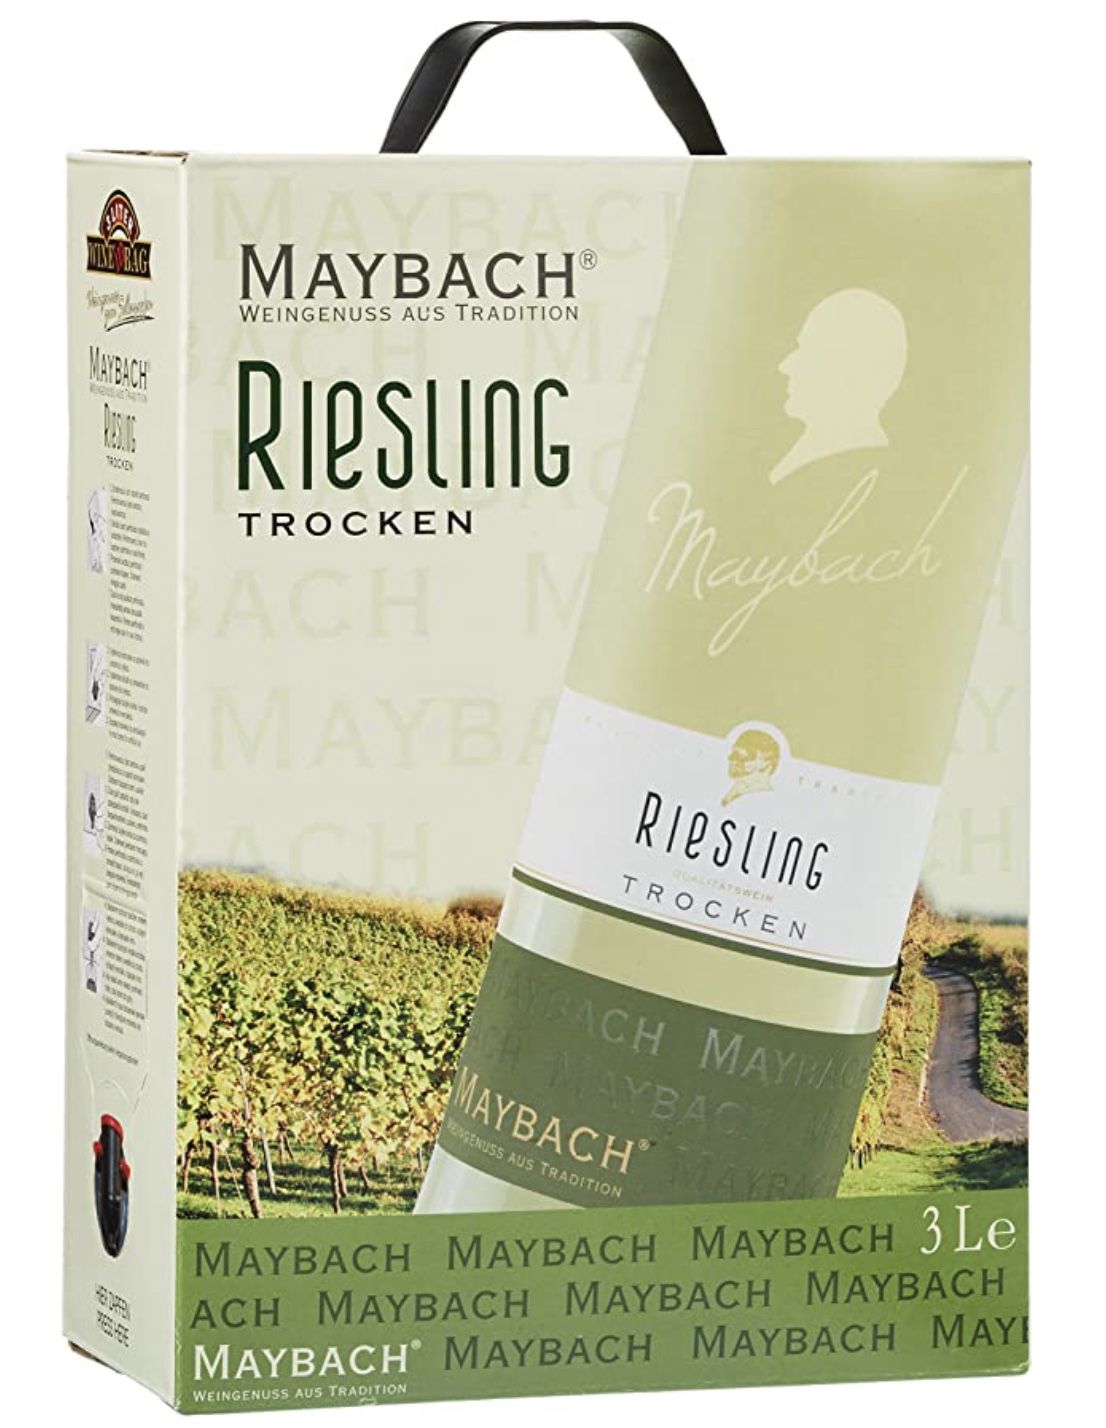 3 Liter Maybach Riesling Trocken Bag in box für 8,49€ (statt 15€)   Prime